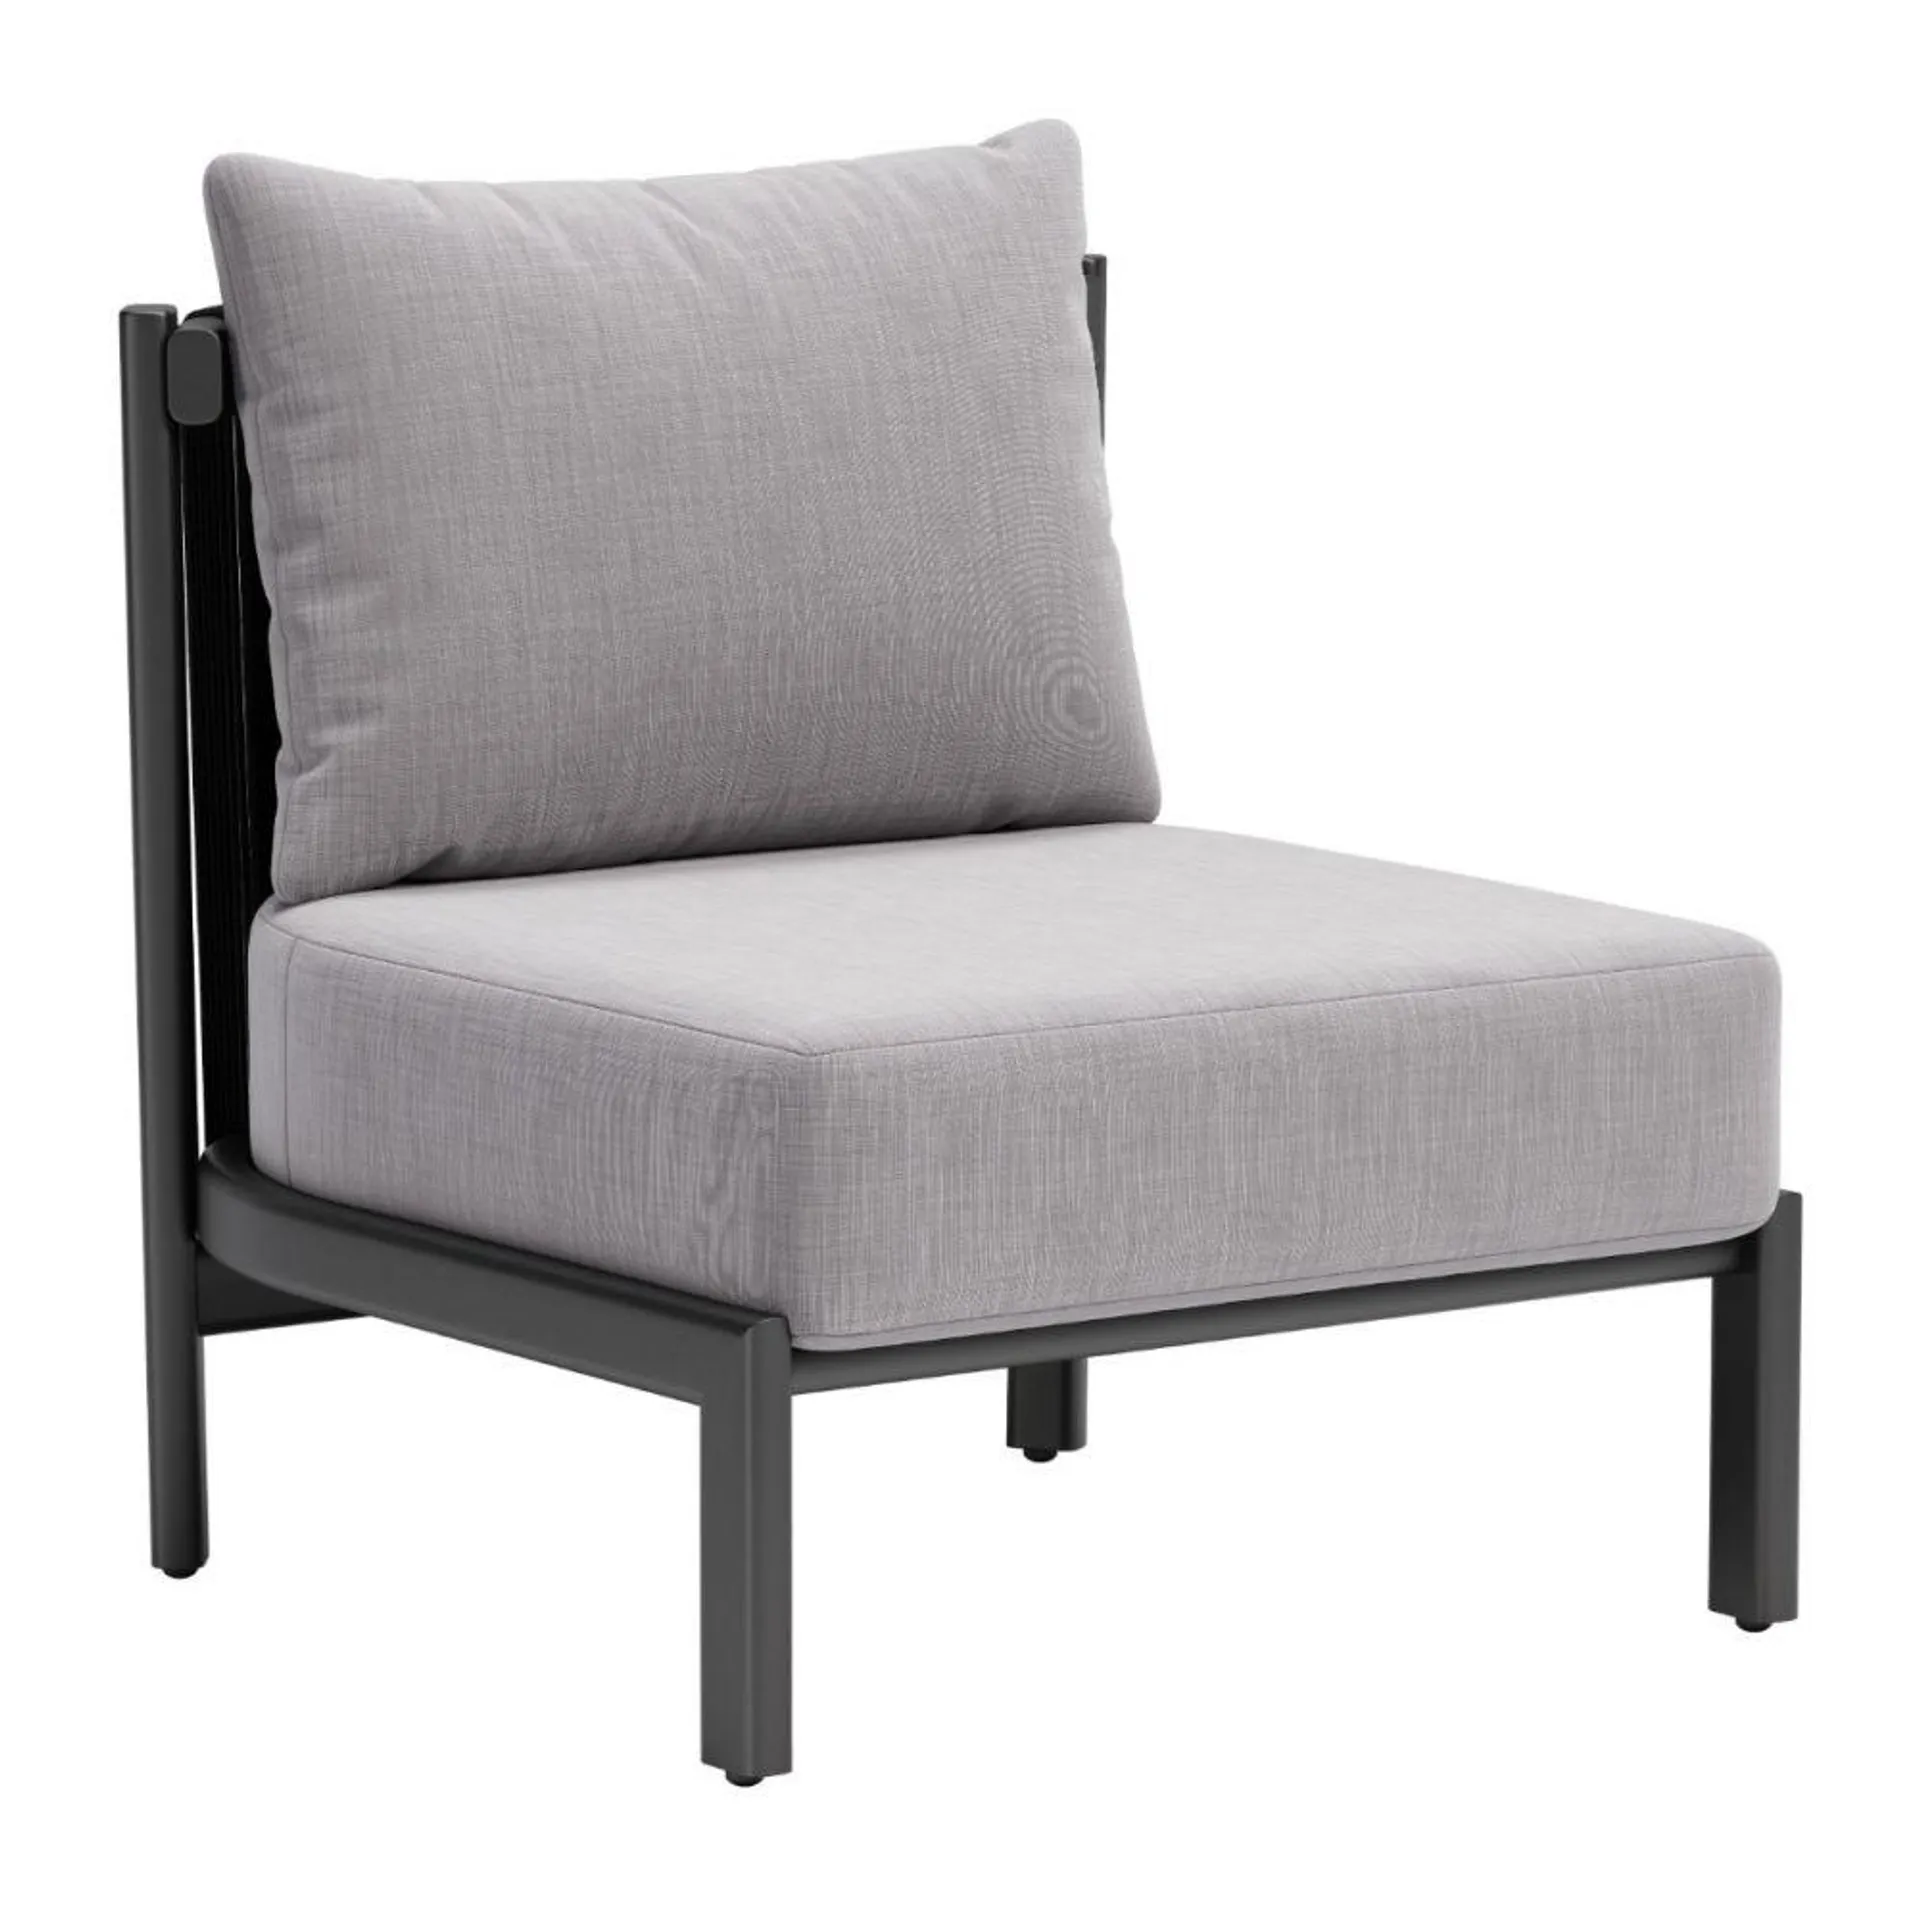 Horizon Accent Chair Gray